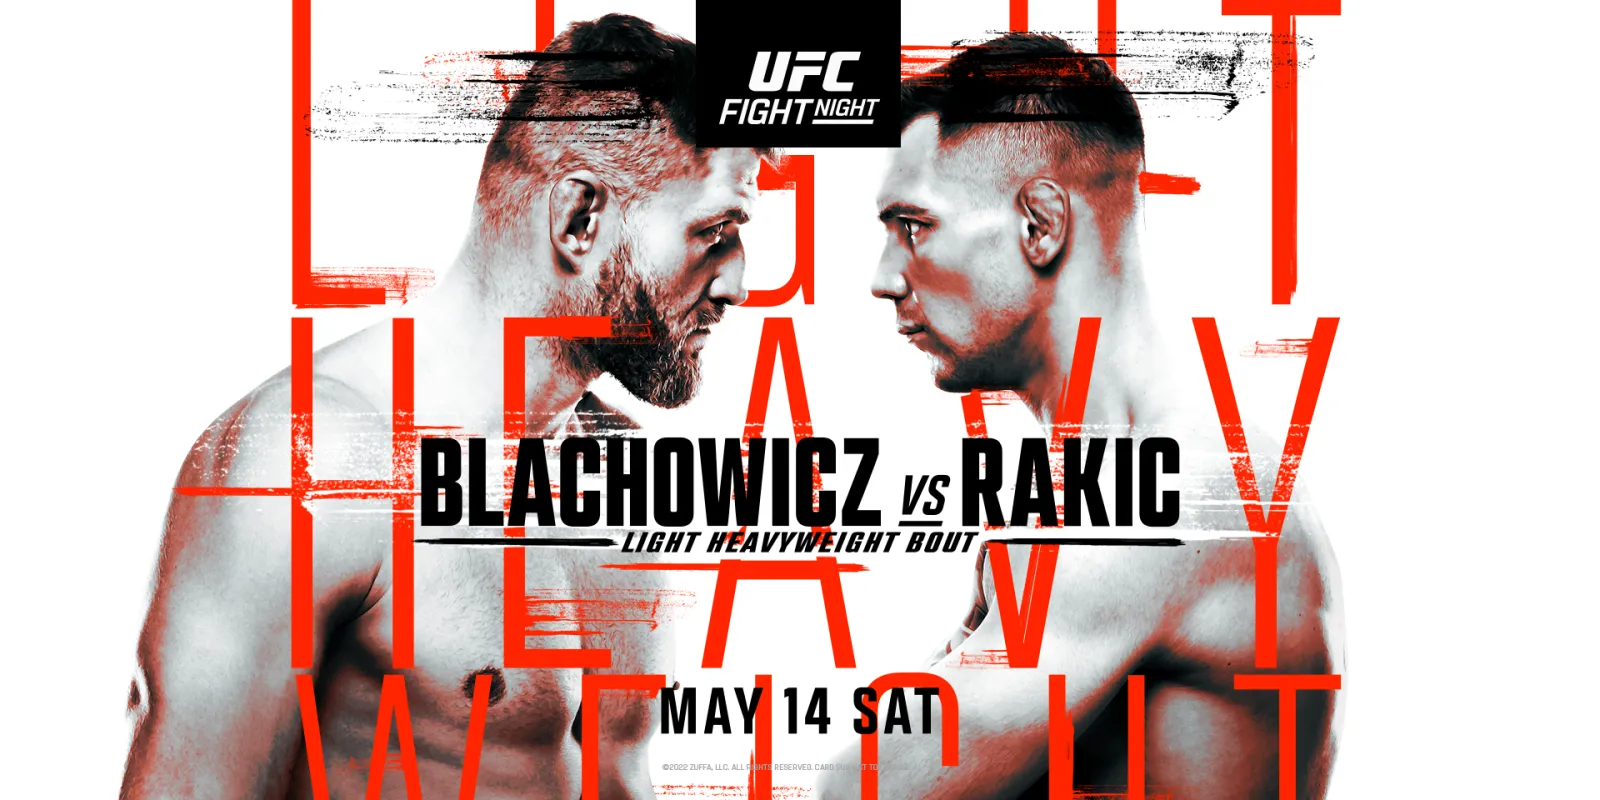 UFC Fight Night Blachowicz vs Rakic - Las Vegas UFC APEX